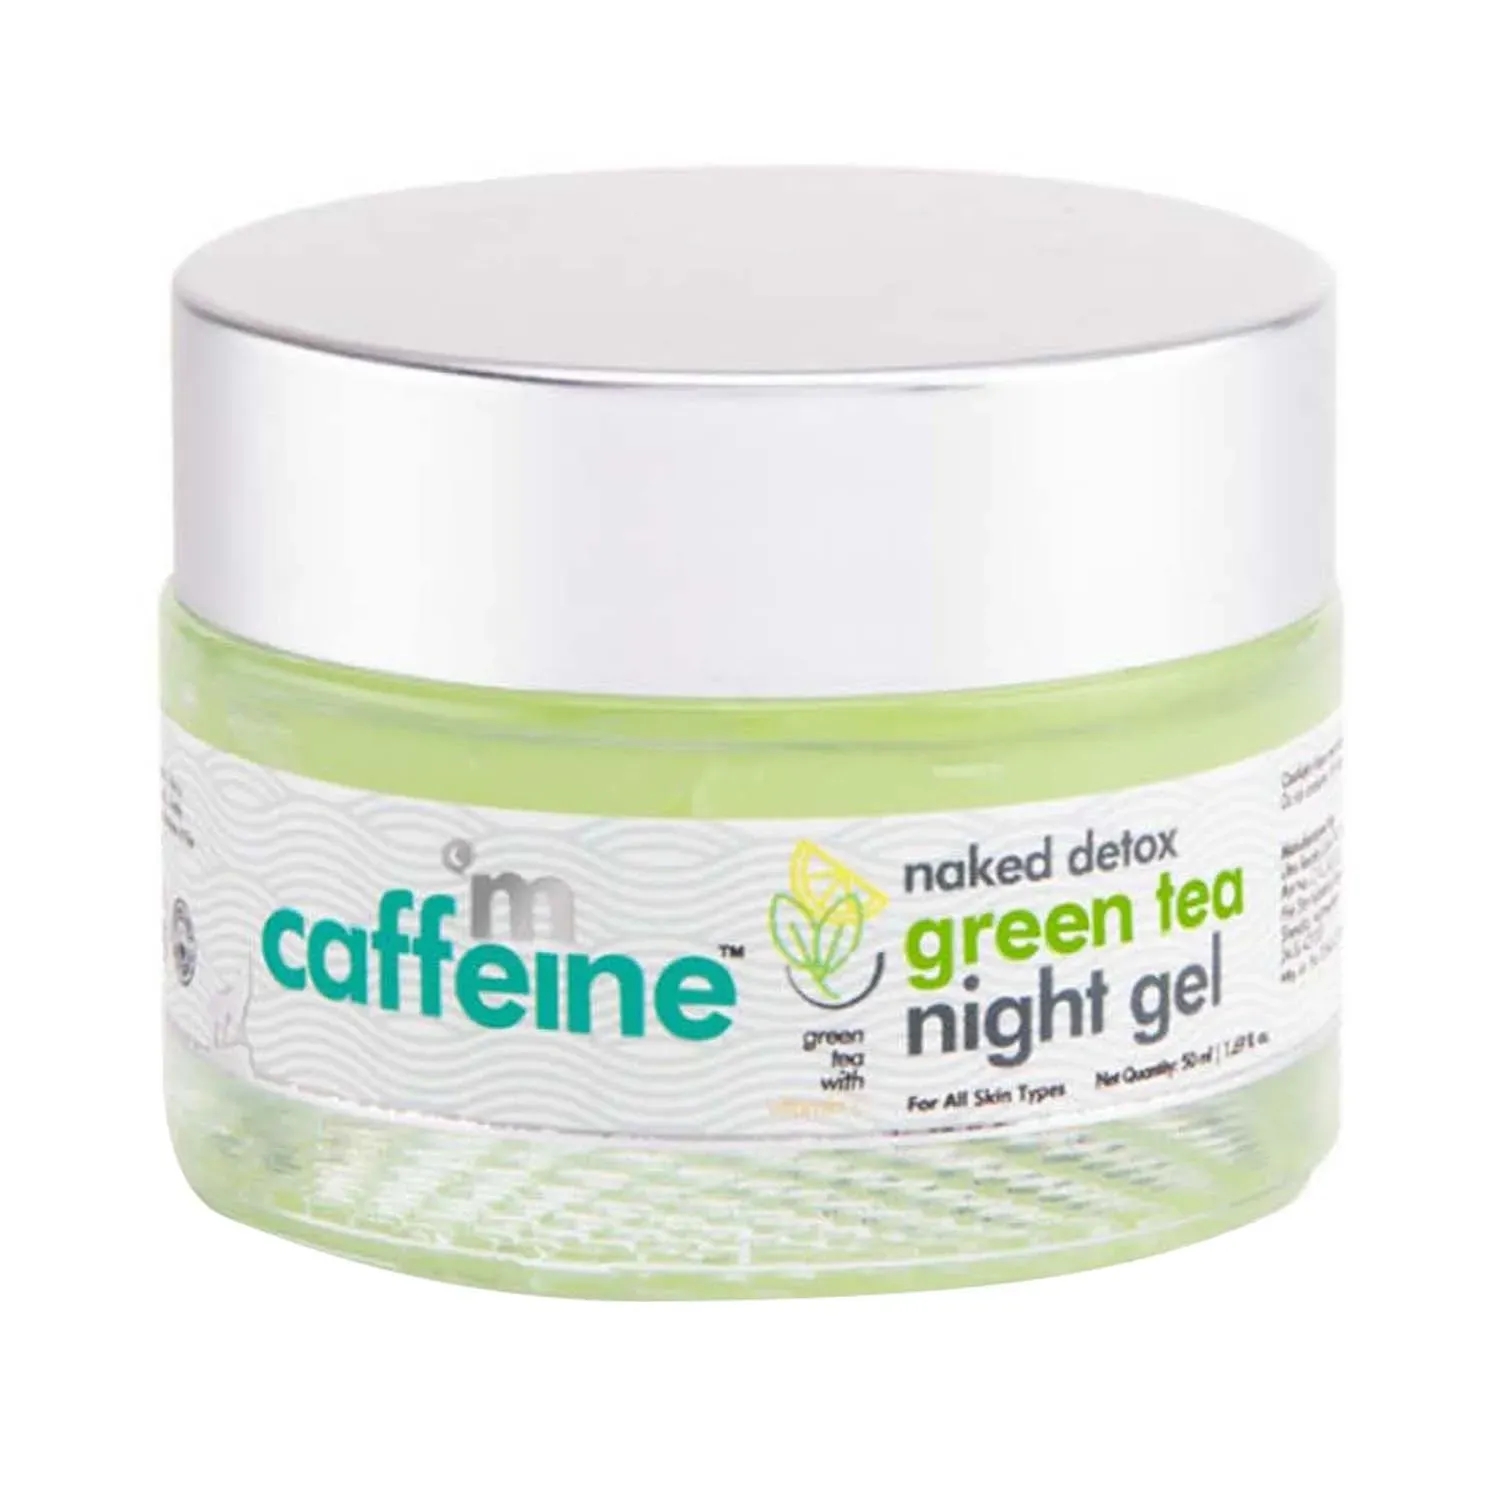 mCaffeine | mCaffeine Naked Detox Hydrating Green Tea Night Gel - (50ml)